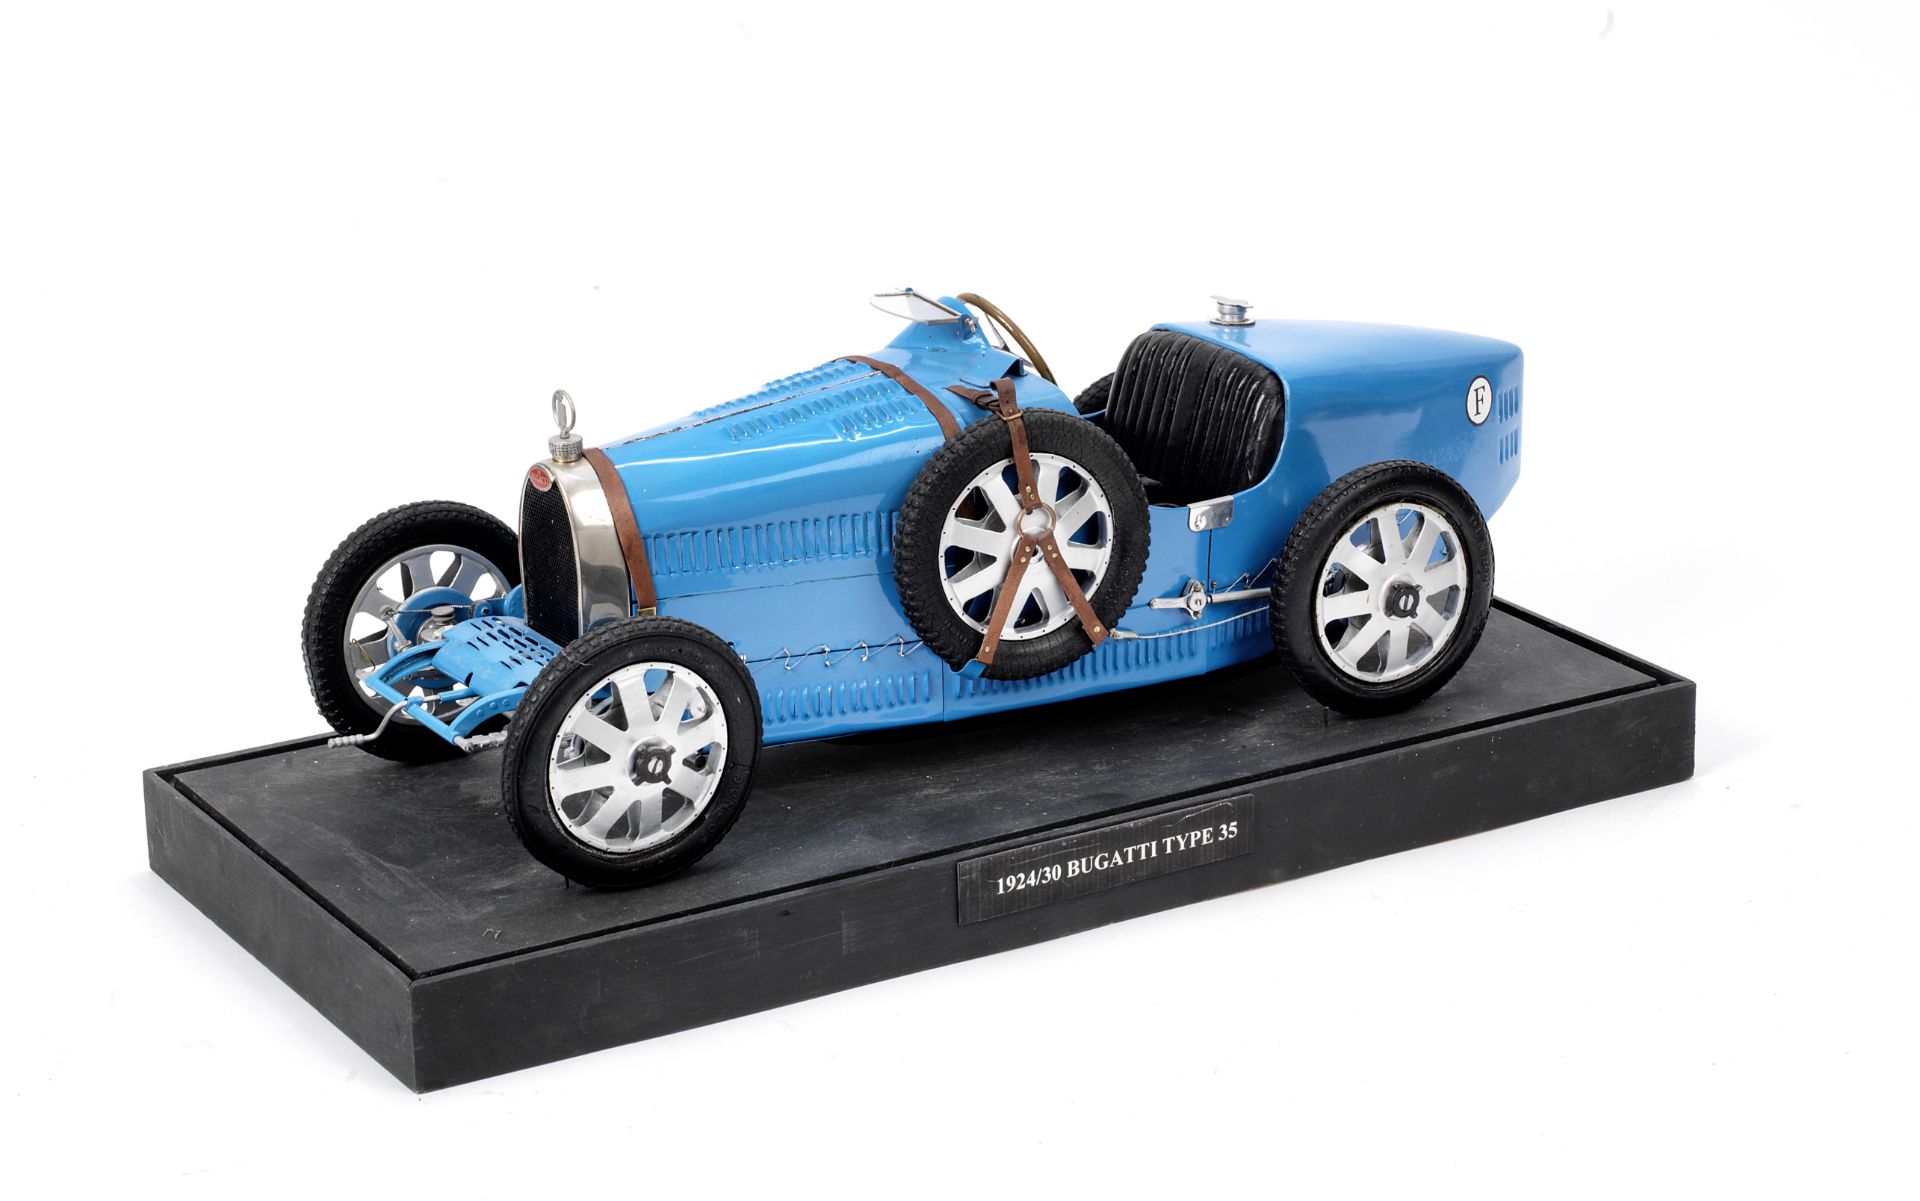 A 1:8 scale model of a Bugatti Type 35,